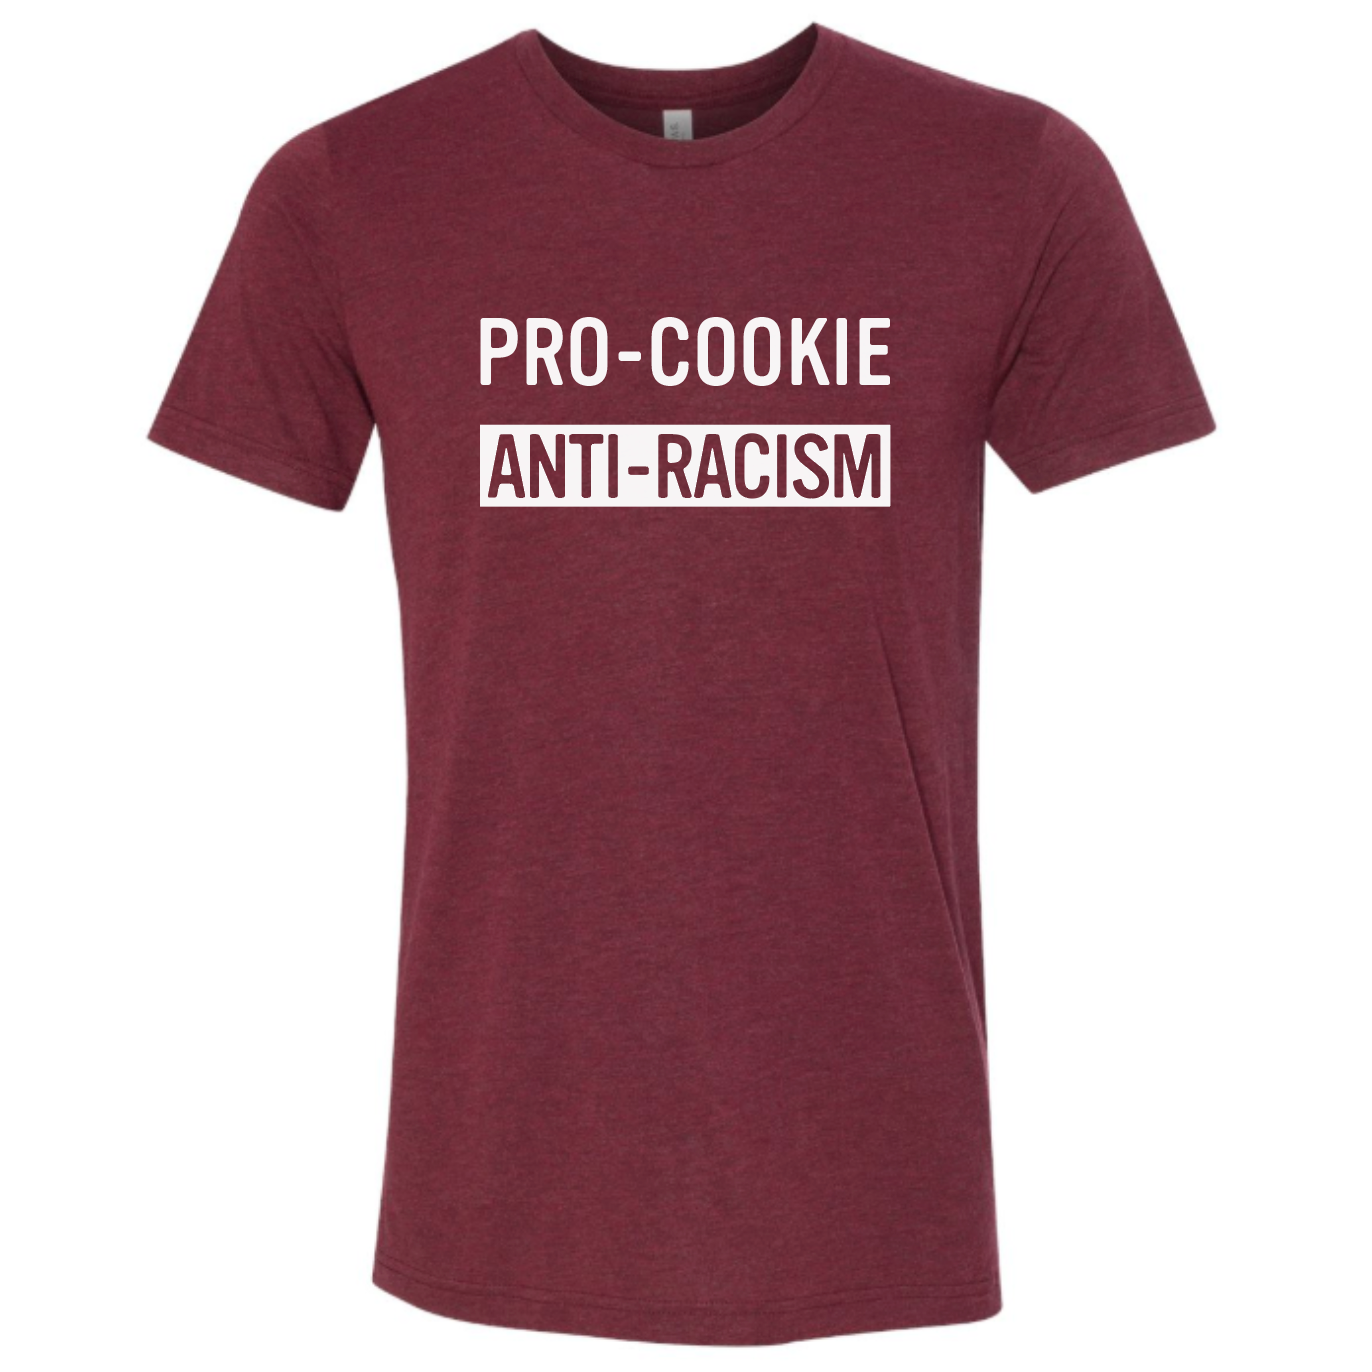 Pro-Cookie, Anti-Racism